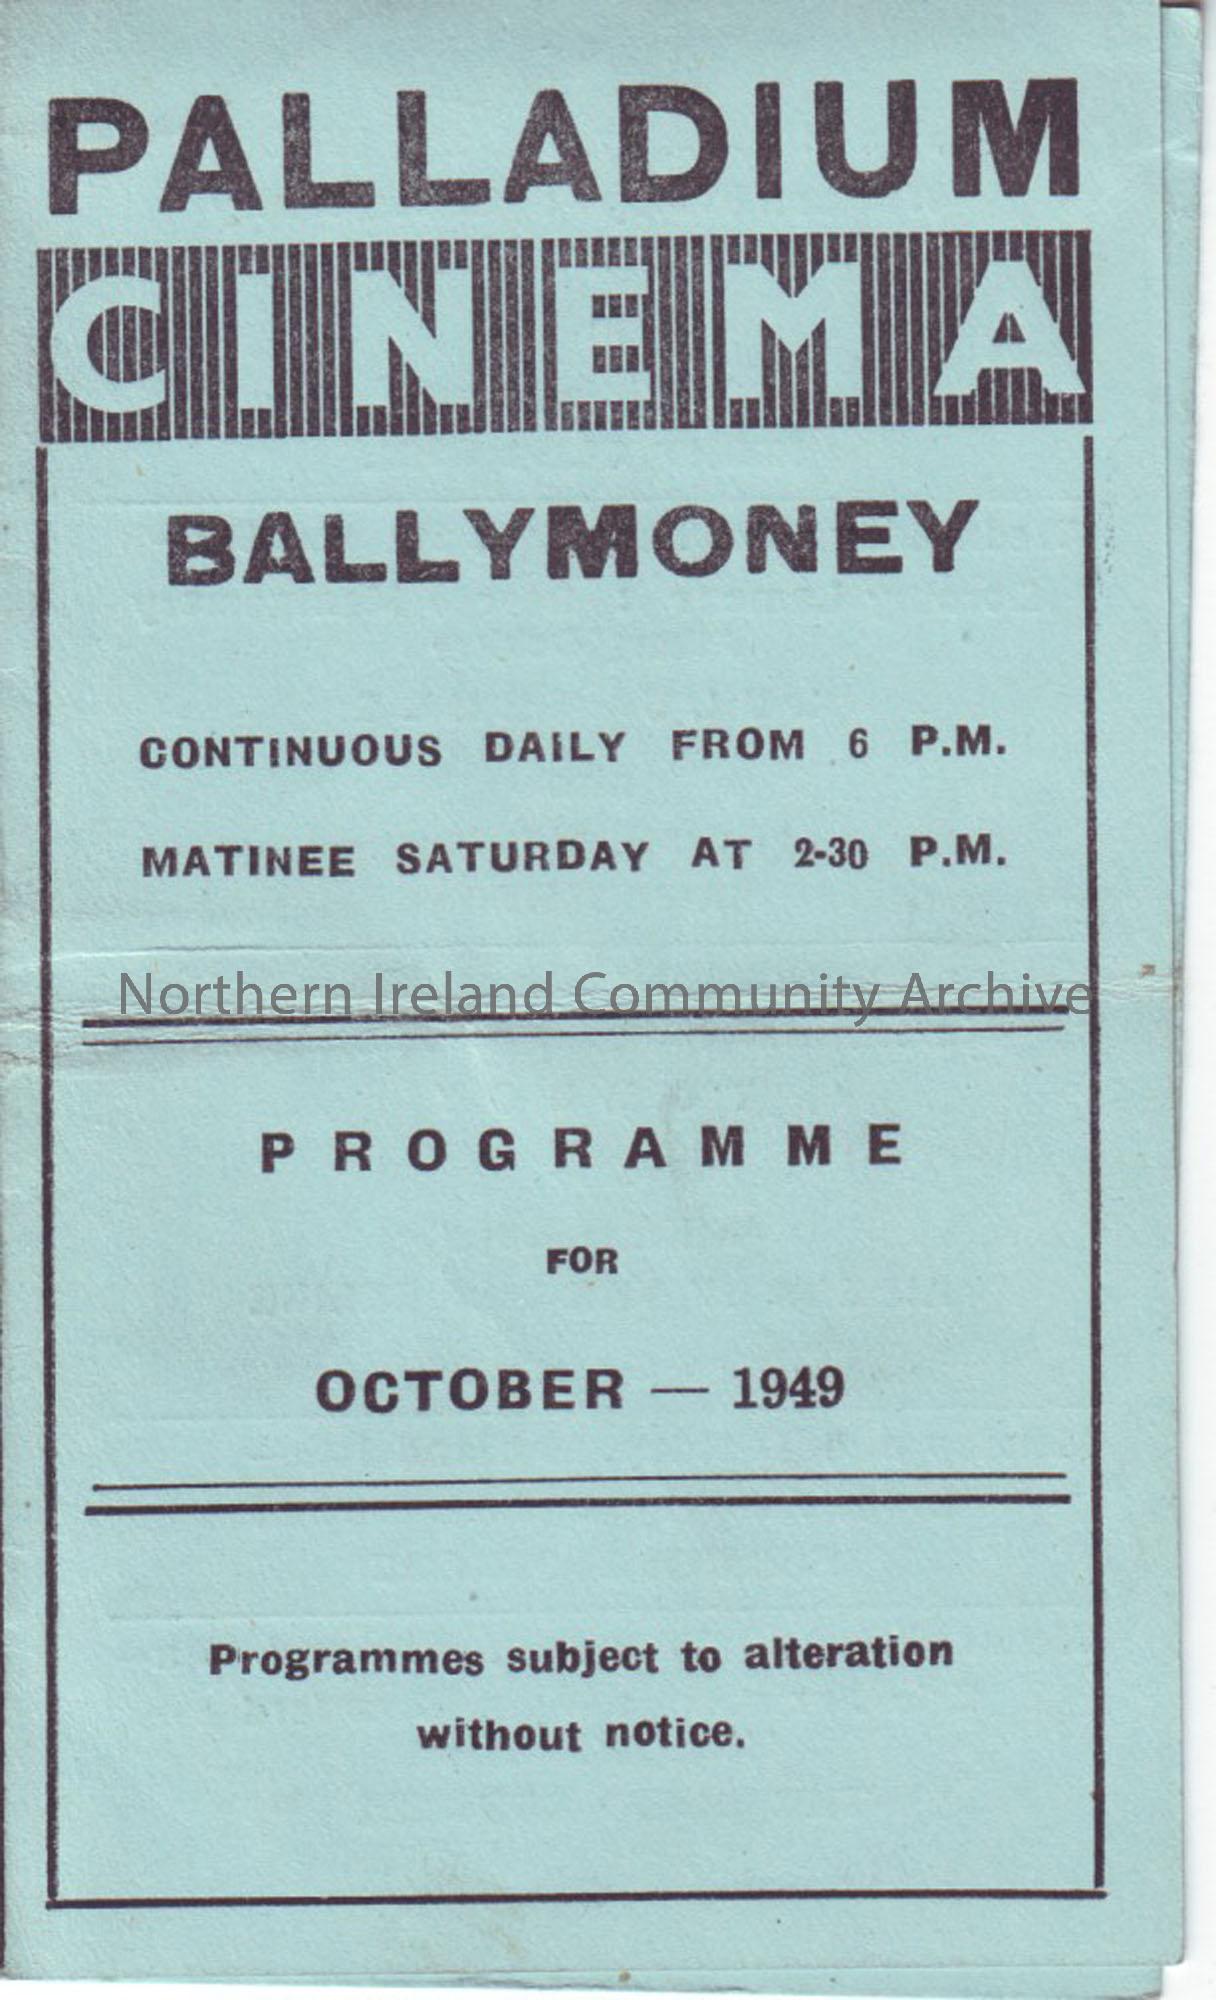 blue monthly programme for Ballymoney Palladium cinema- October 1949